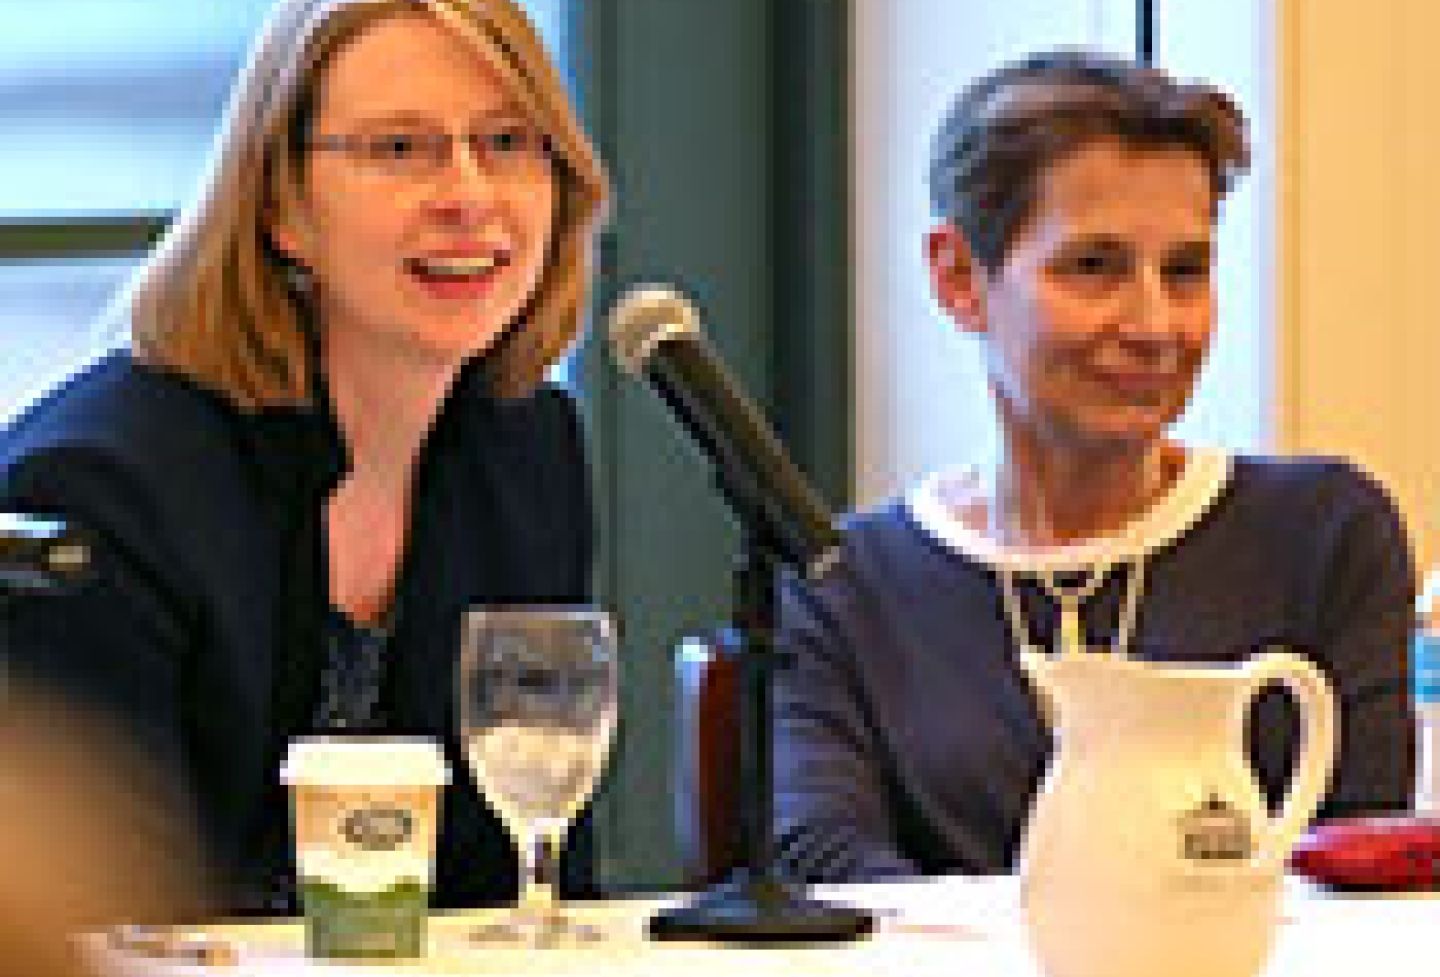 Kelly Abrams and Nancy Polikoff